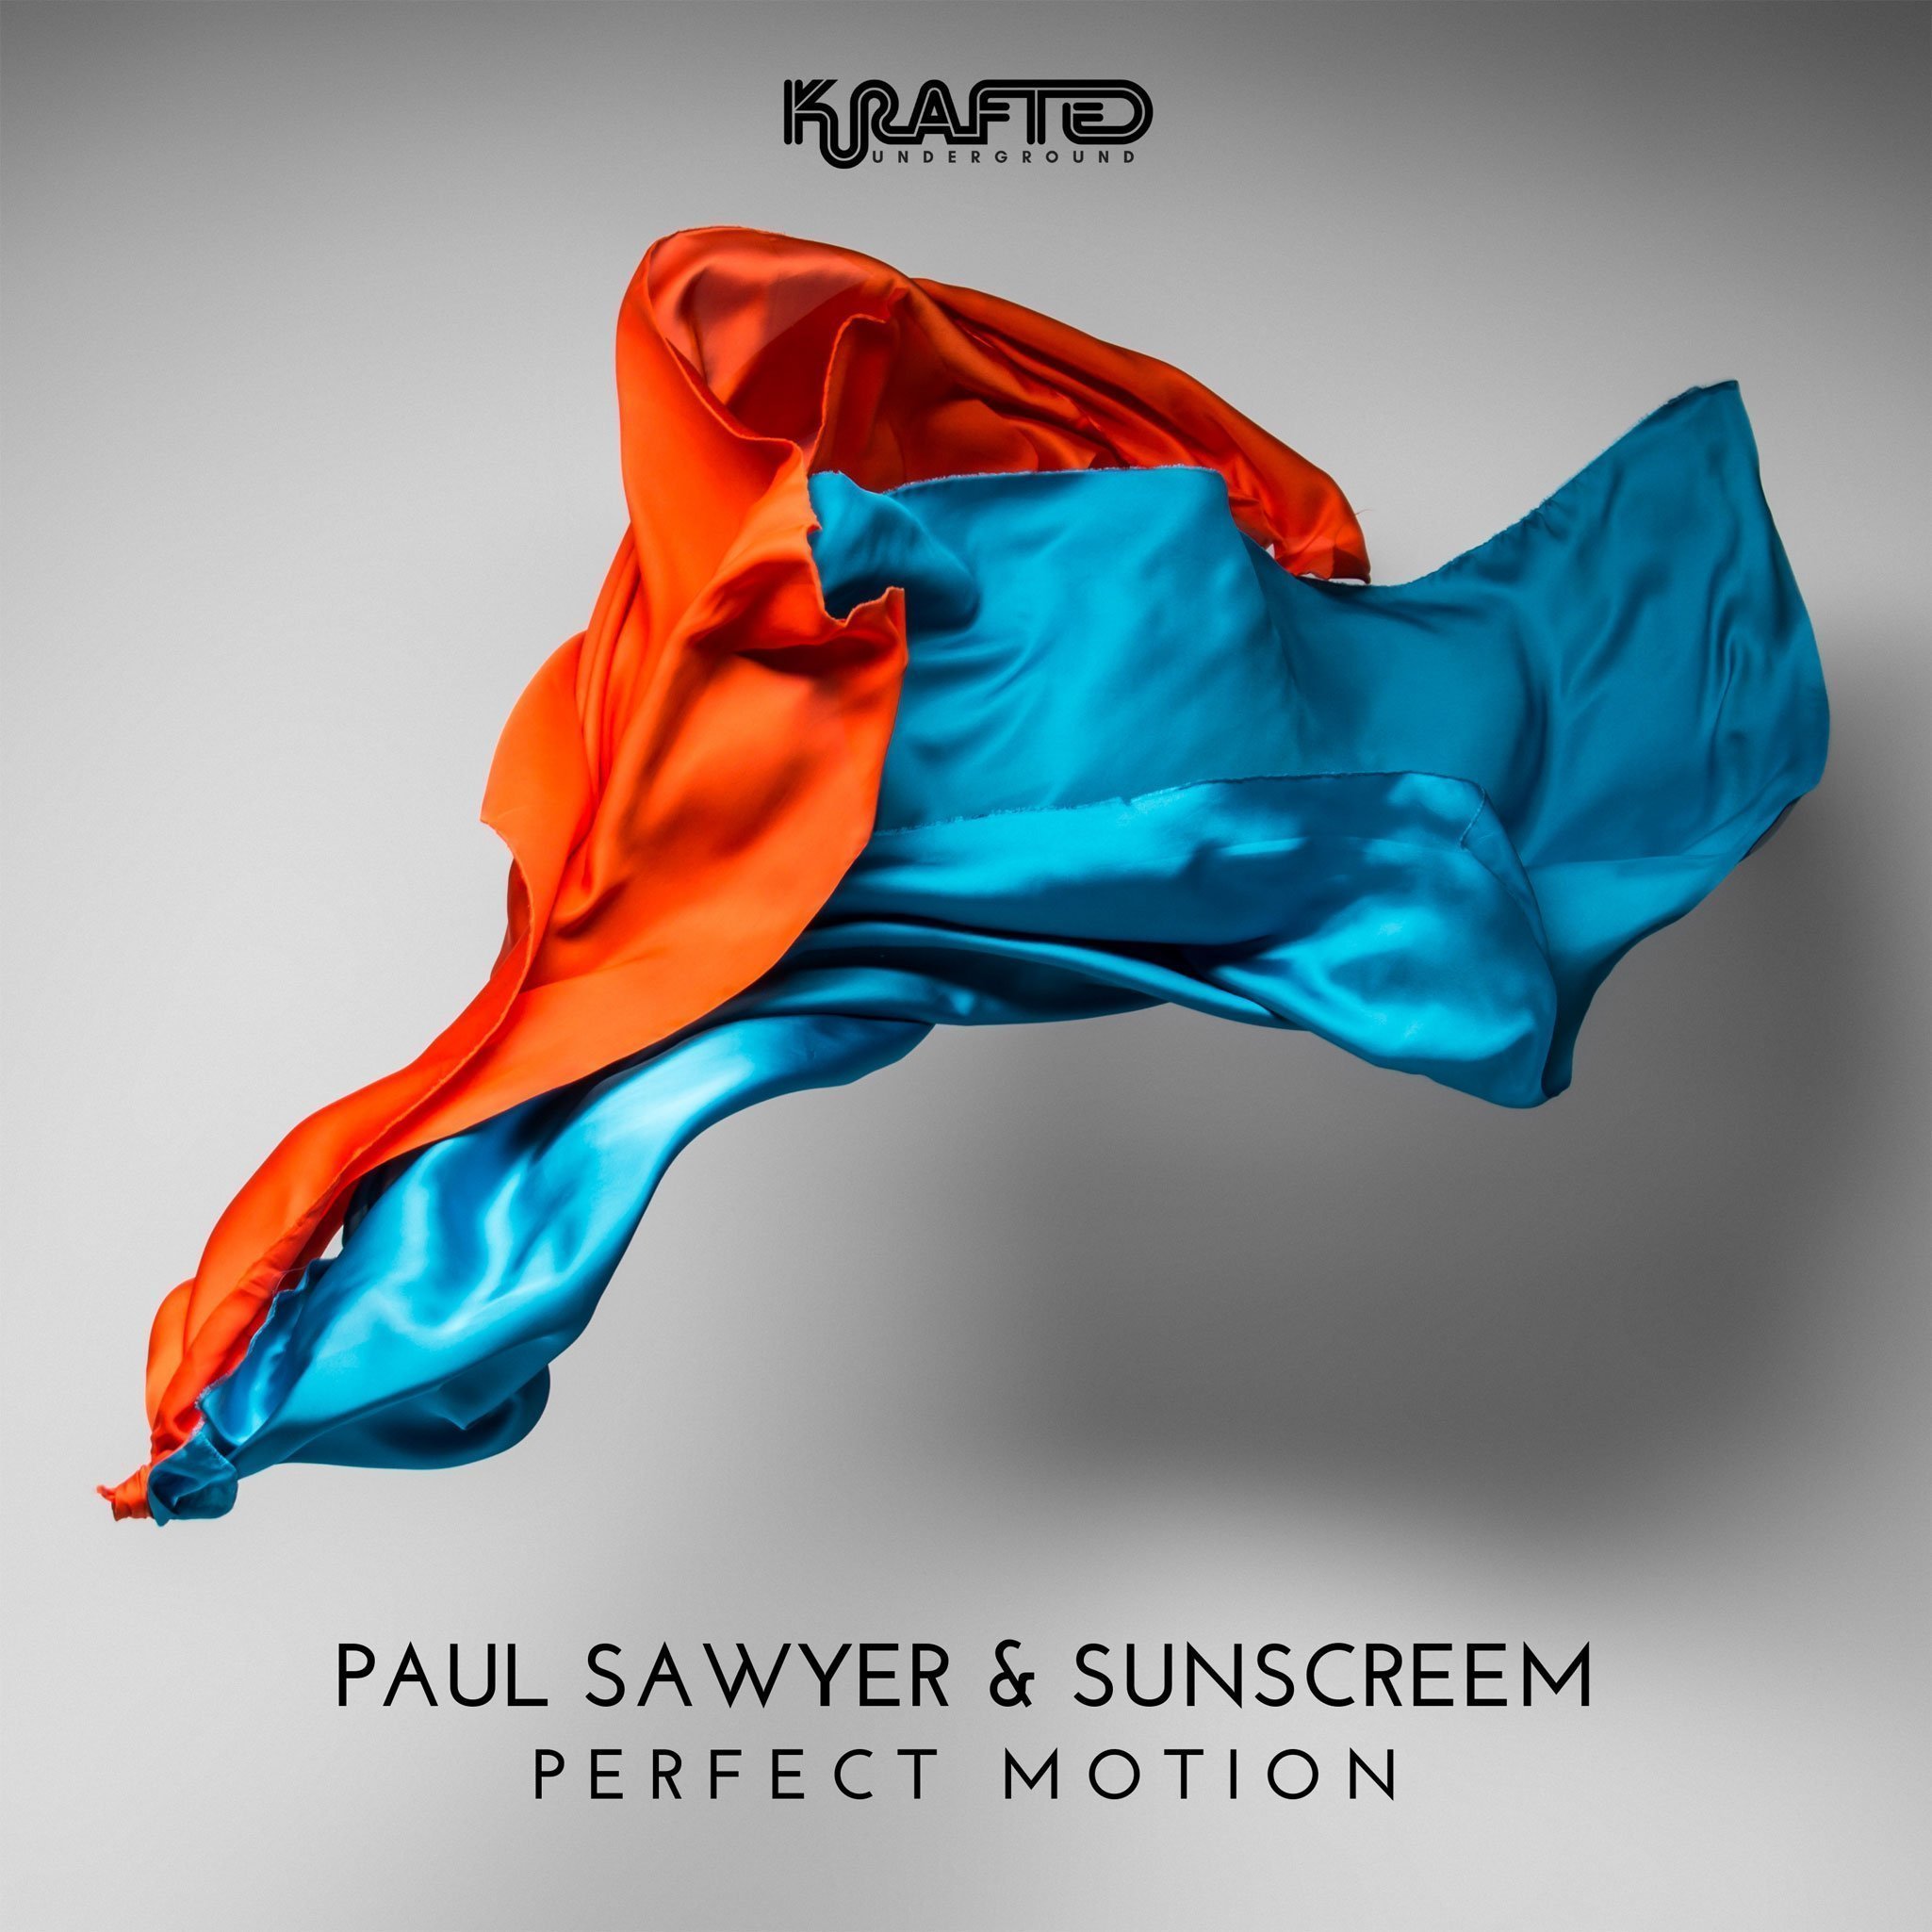 Paul Sawyer & Sunscreem release Perfect Motion (Krafted Underground) Mix - Listen Now 